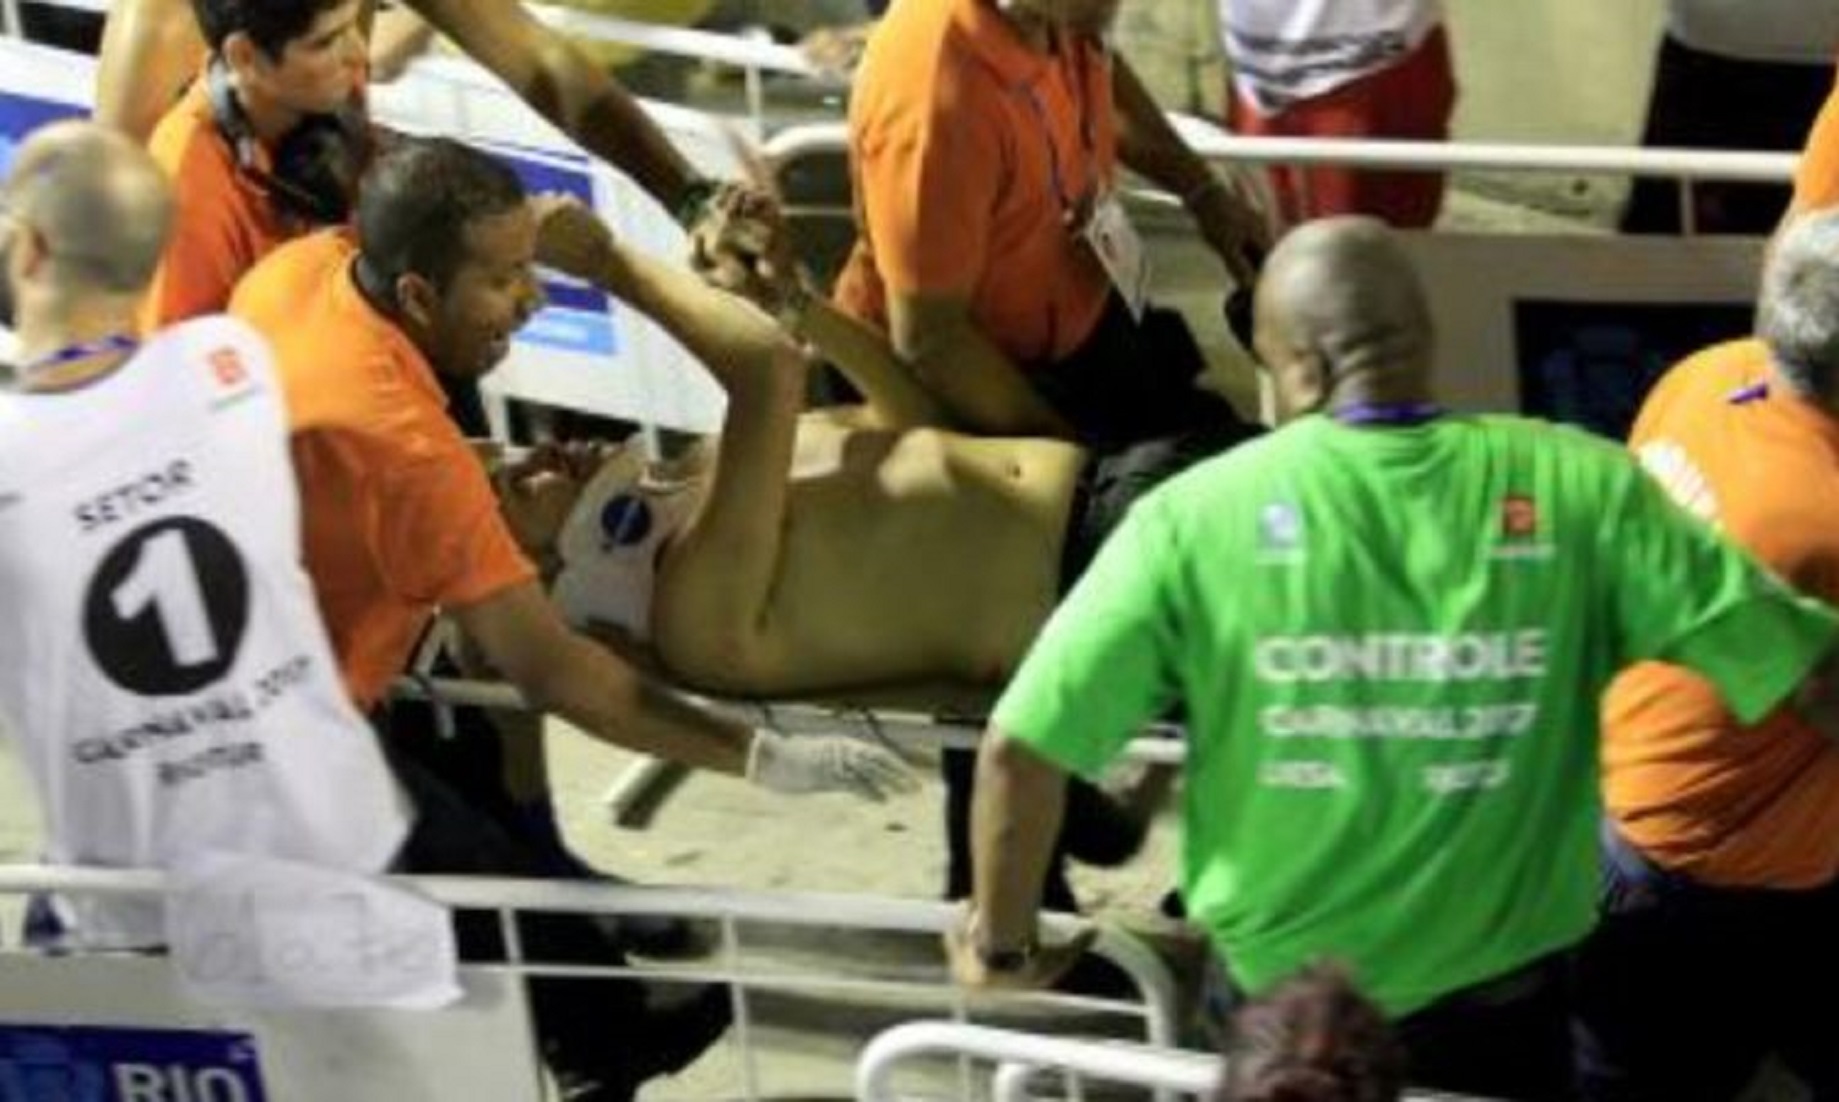 11 Killed, Dozens Injured In Head-On Collision In Brazil